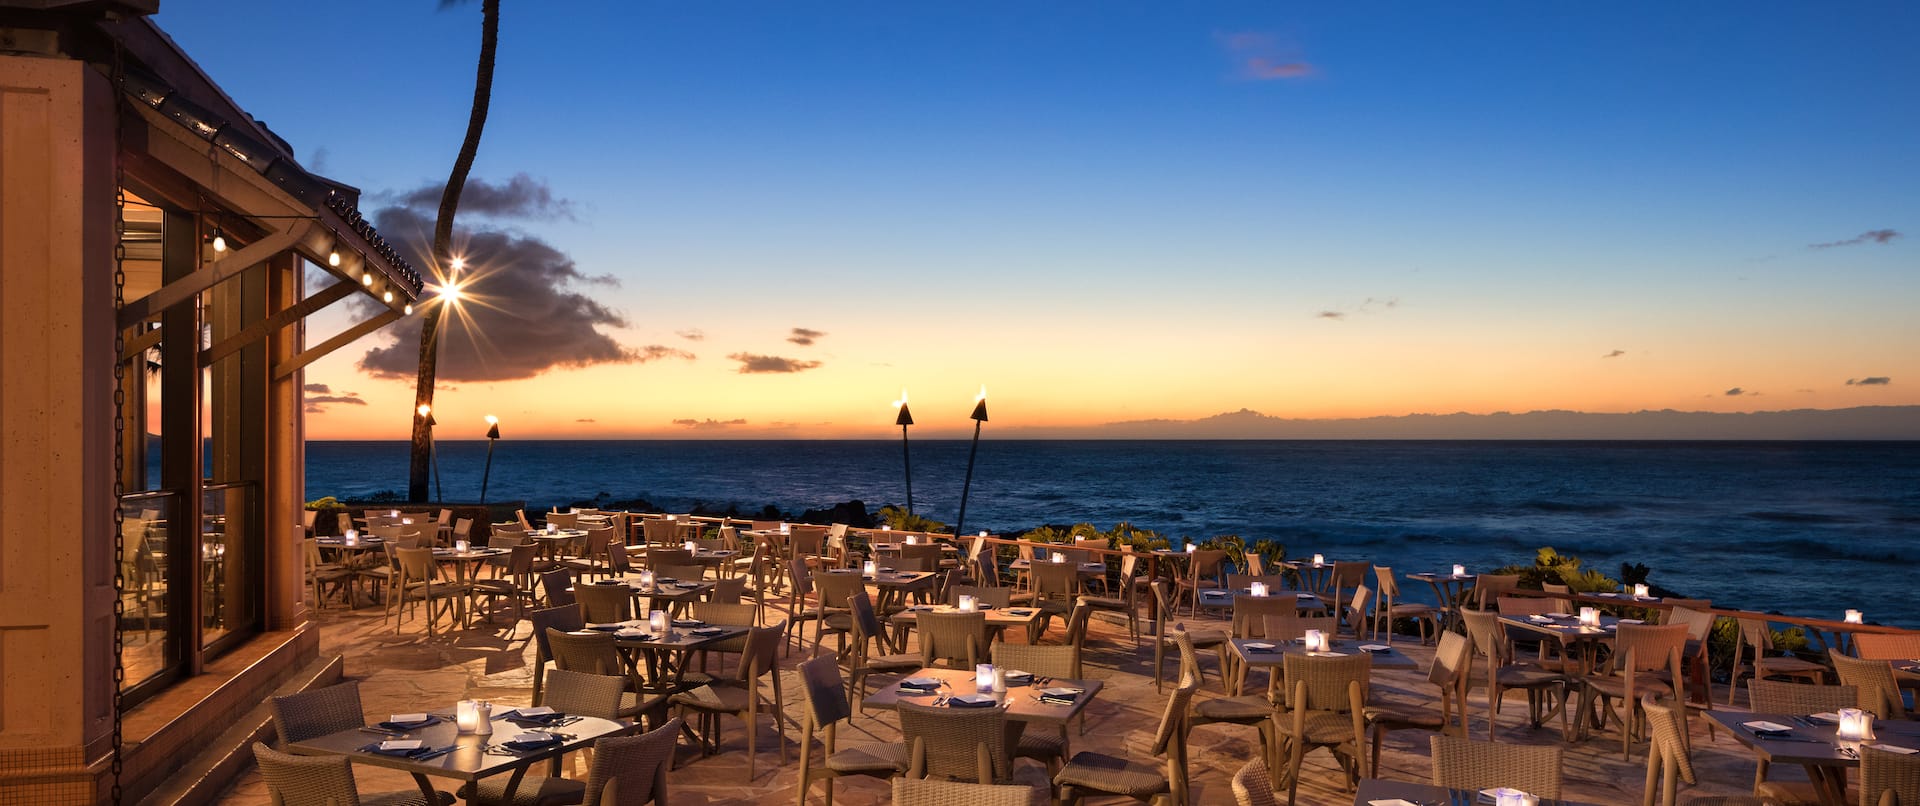 Outdoor Oceanside Restaurant Dining Area at Sunset